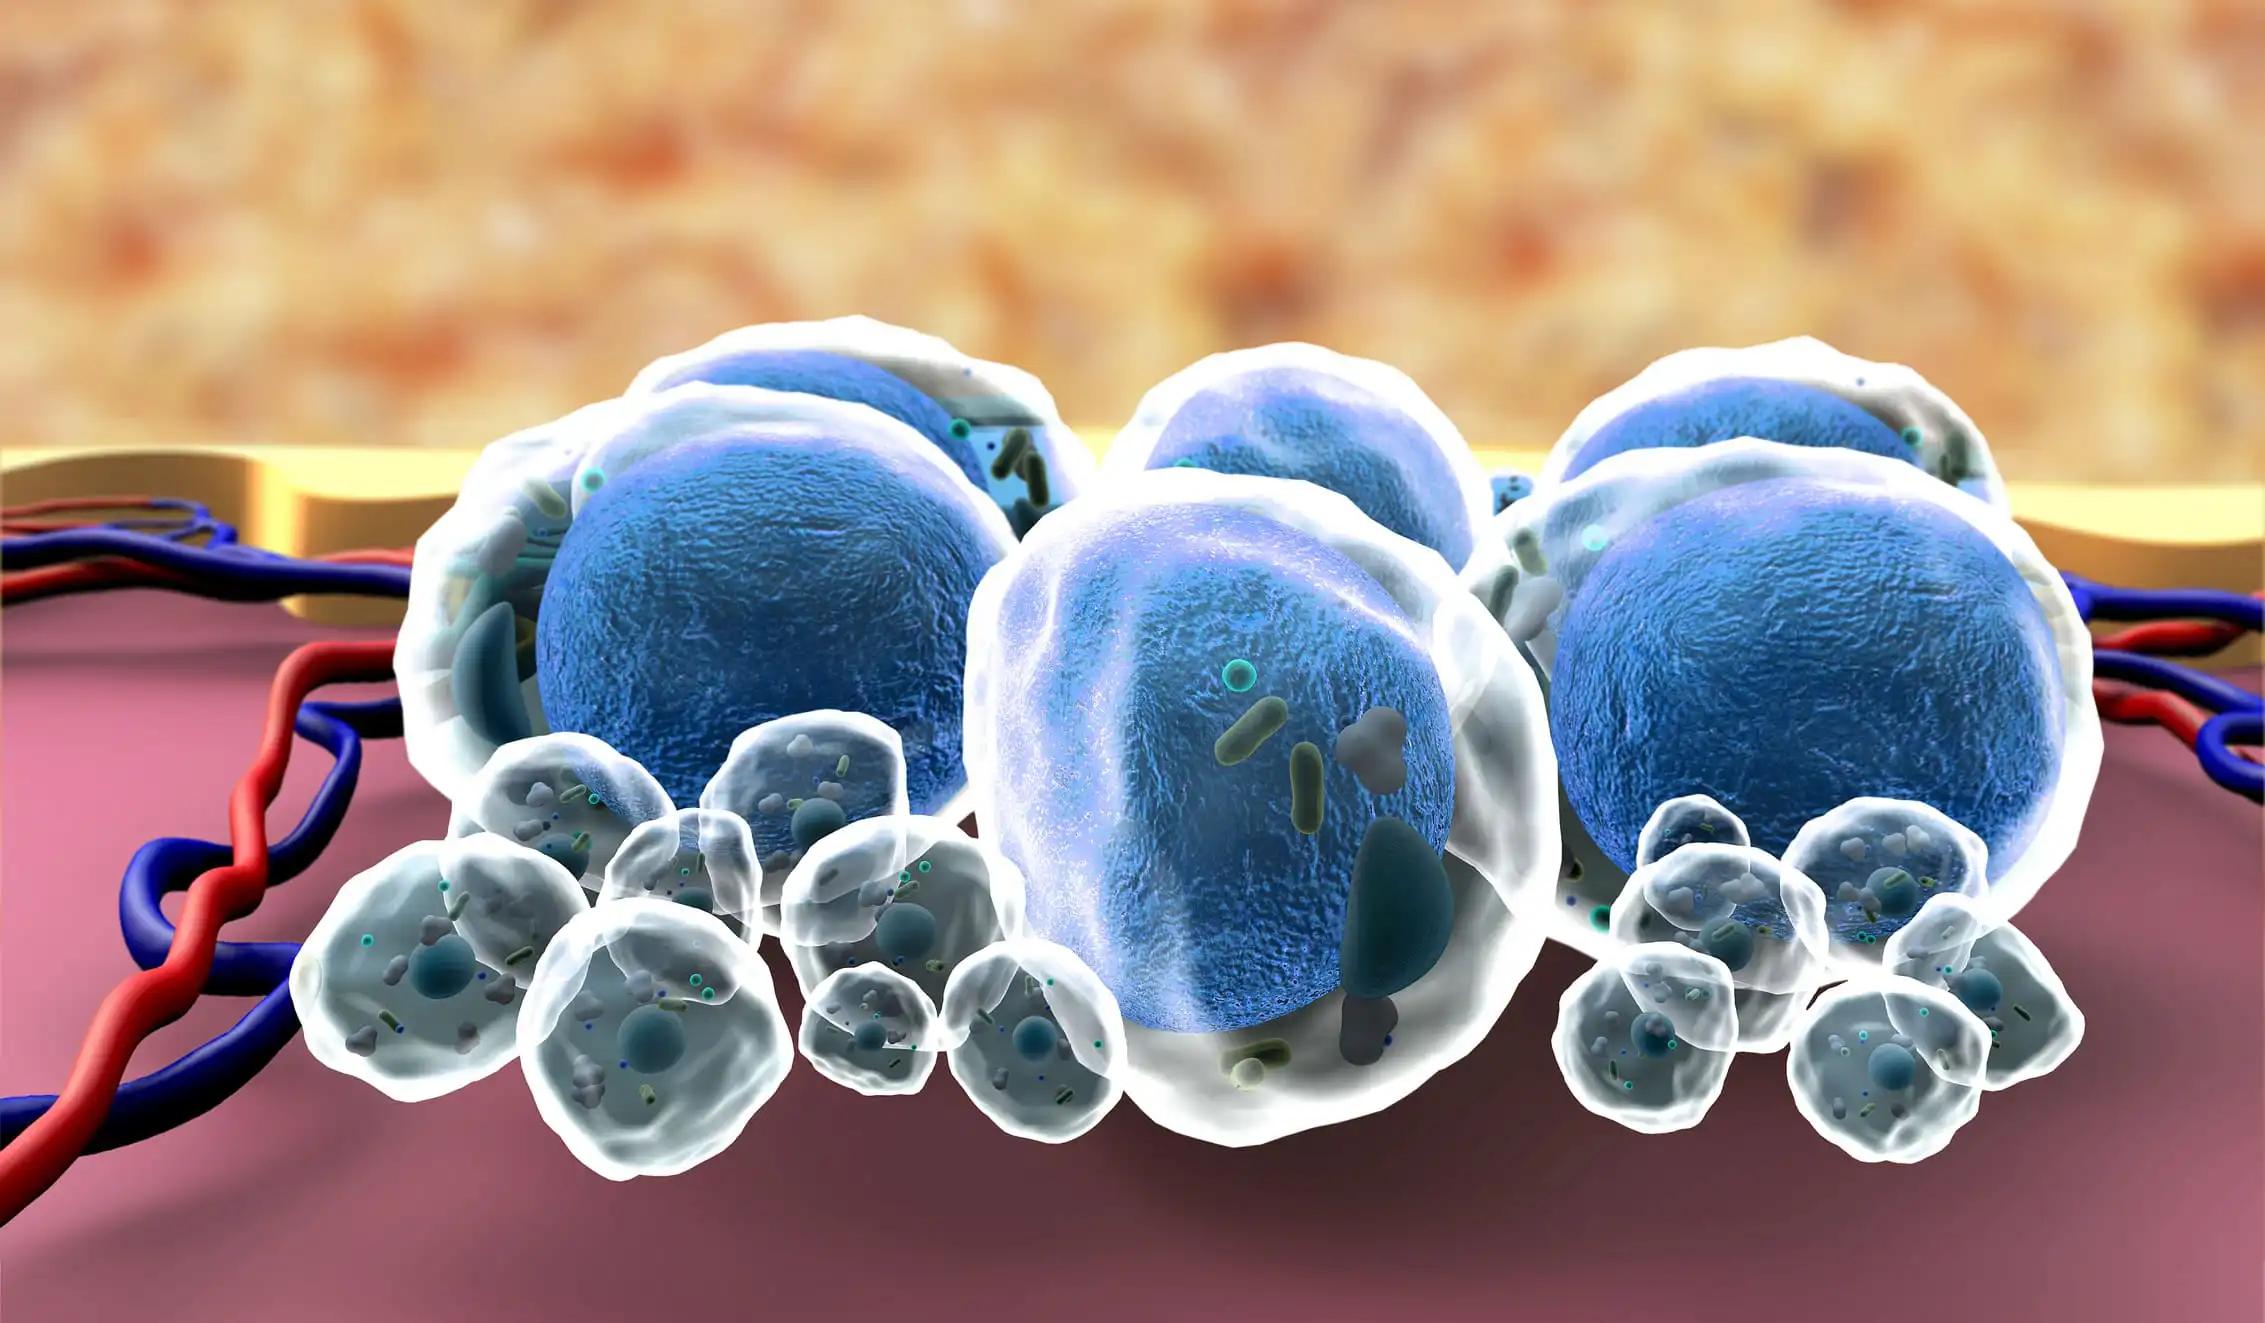 3D illustration of Fat Cells